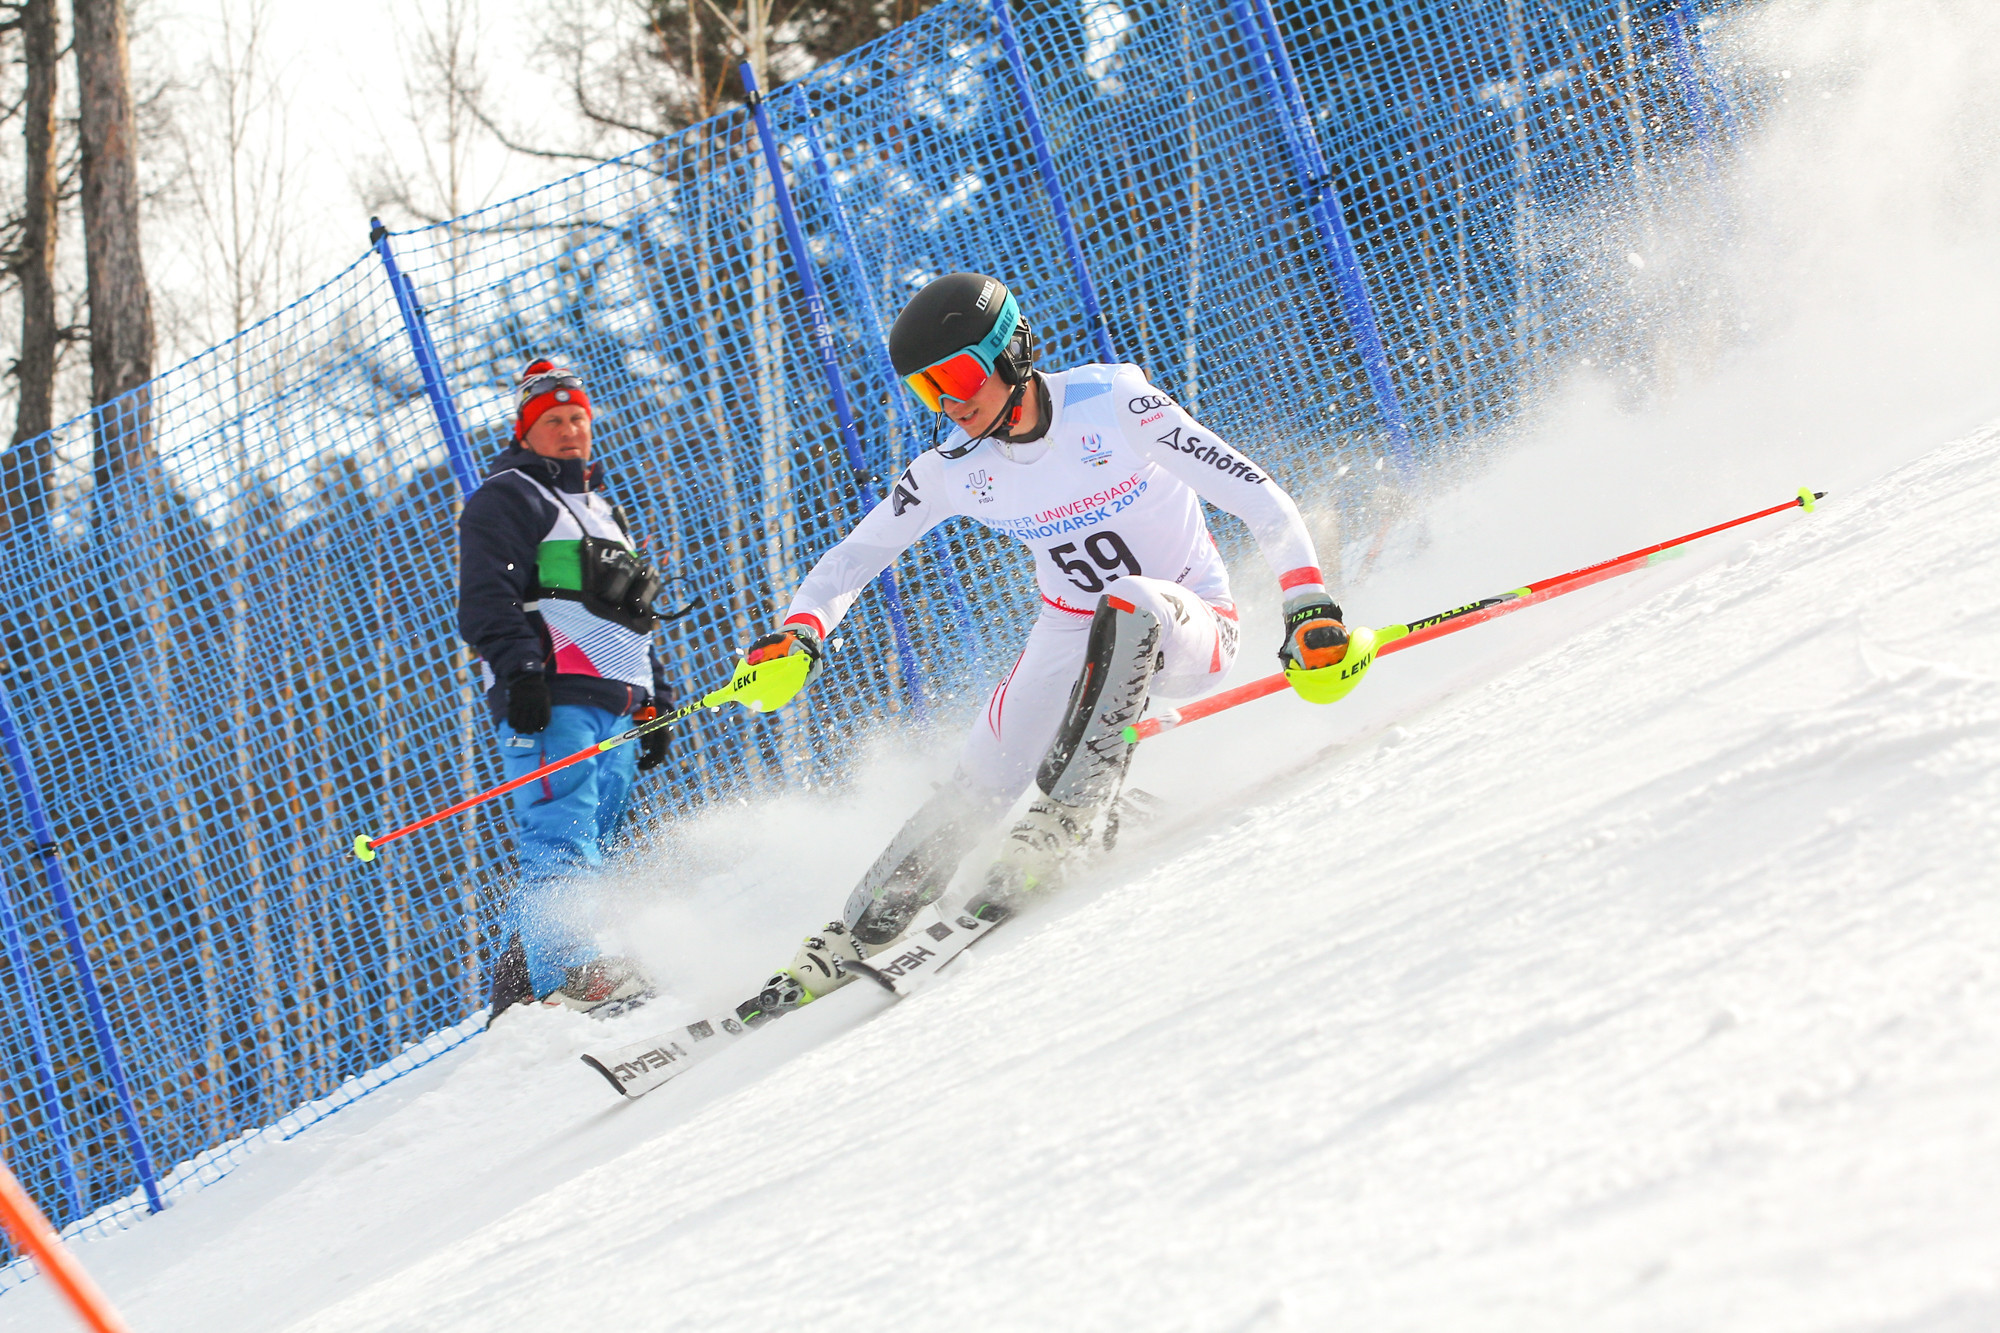 The men's slalom also marked the last Alpine skiing event of the Universiade ©Krasnoyarsk 2019